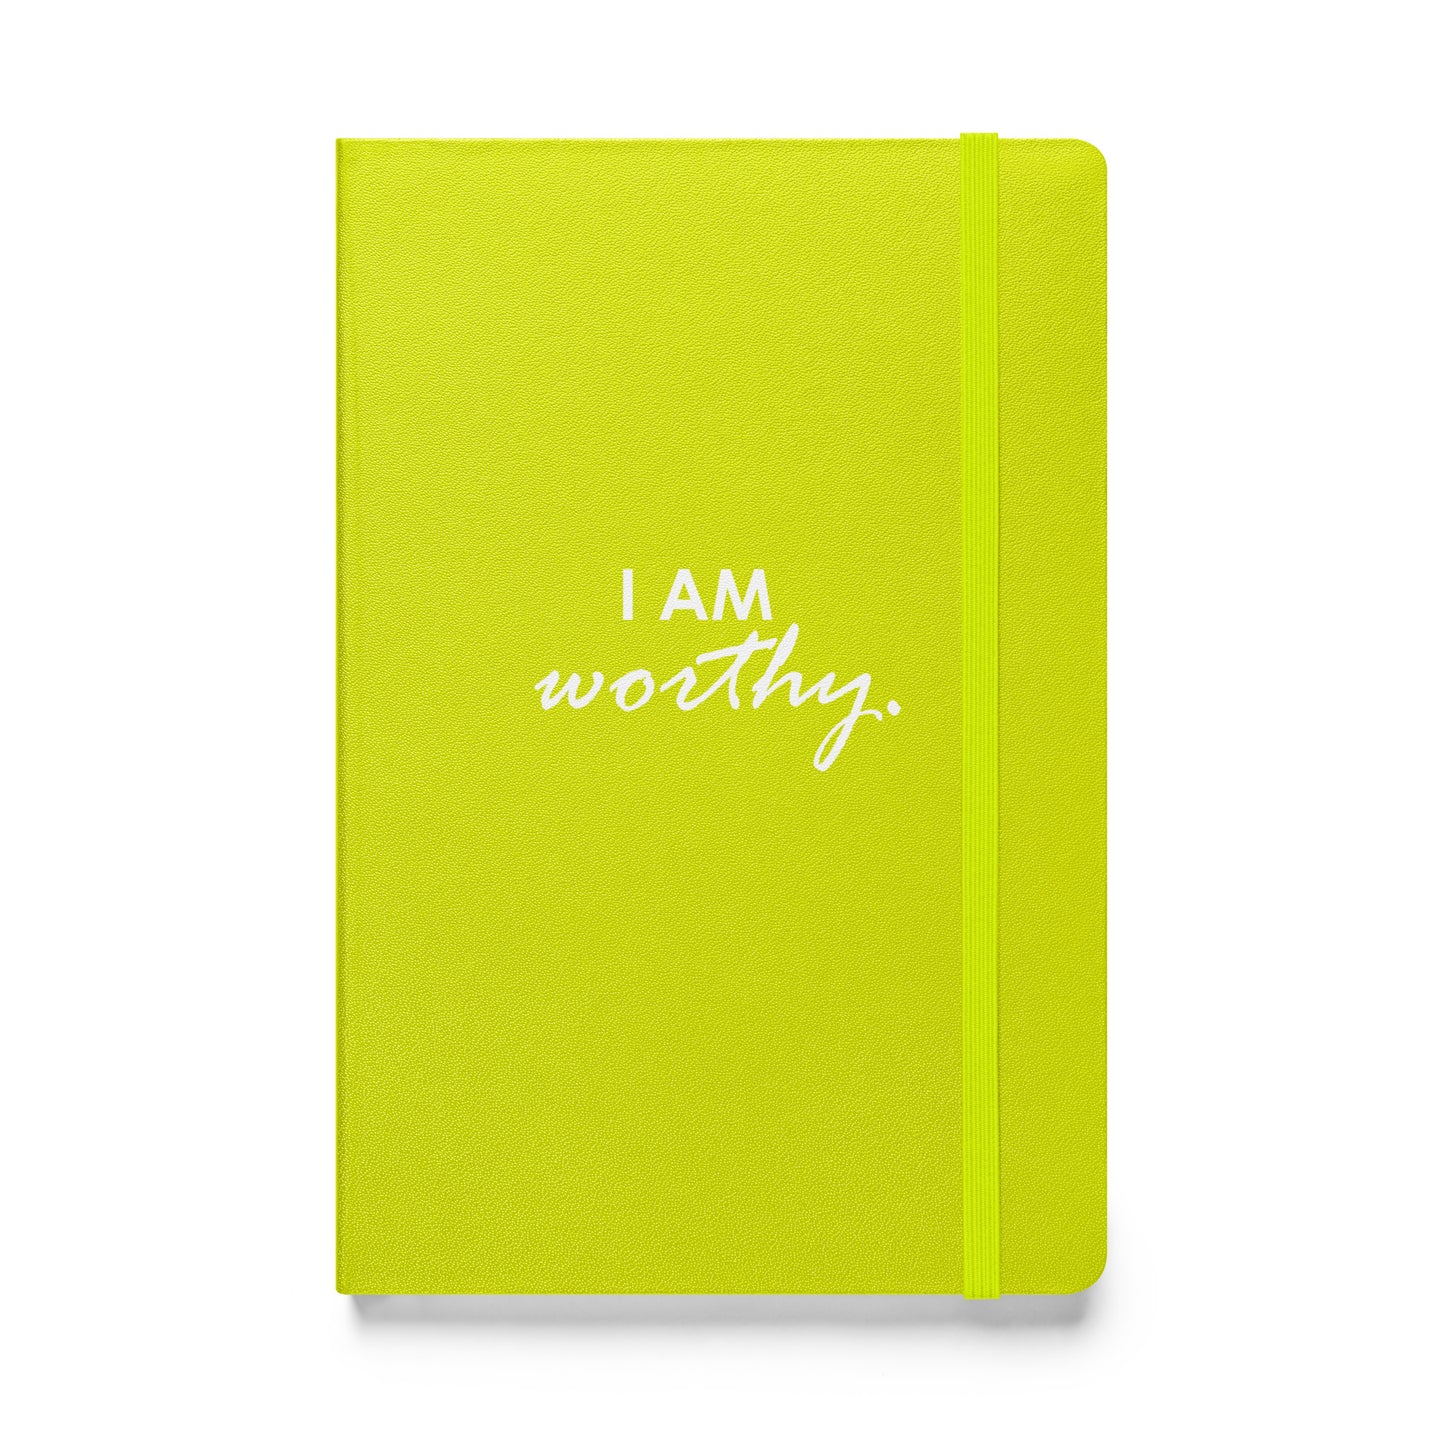 I AM WORTHY - Hardcover bound notebook & FREE Affirmation Digital Download